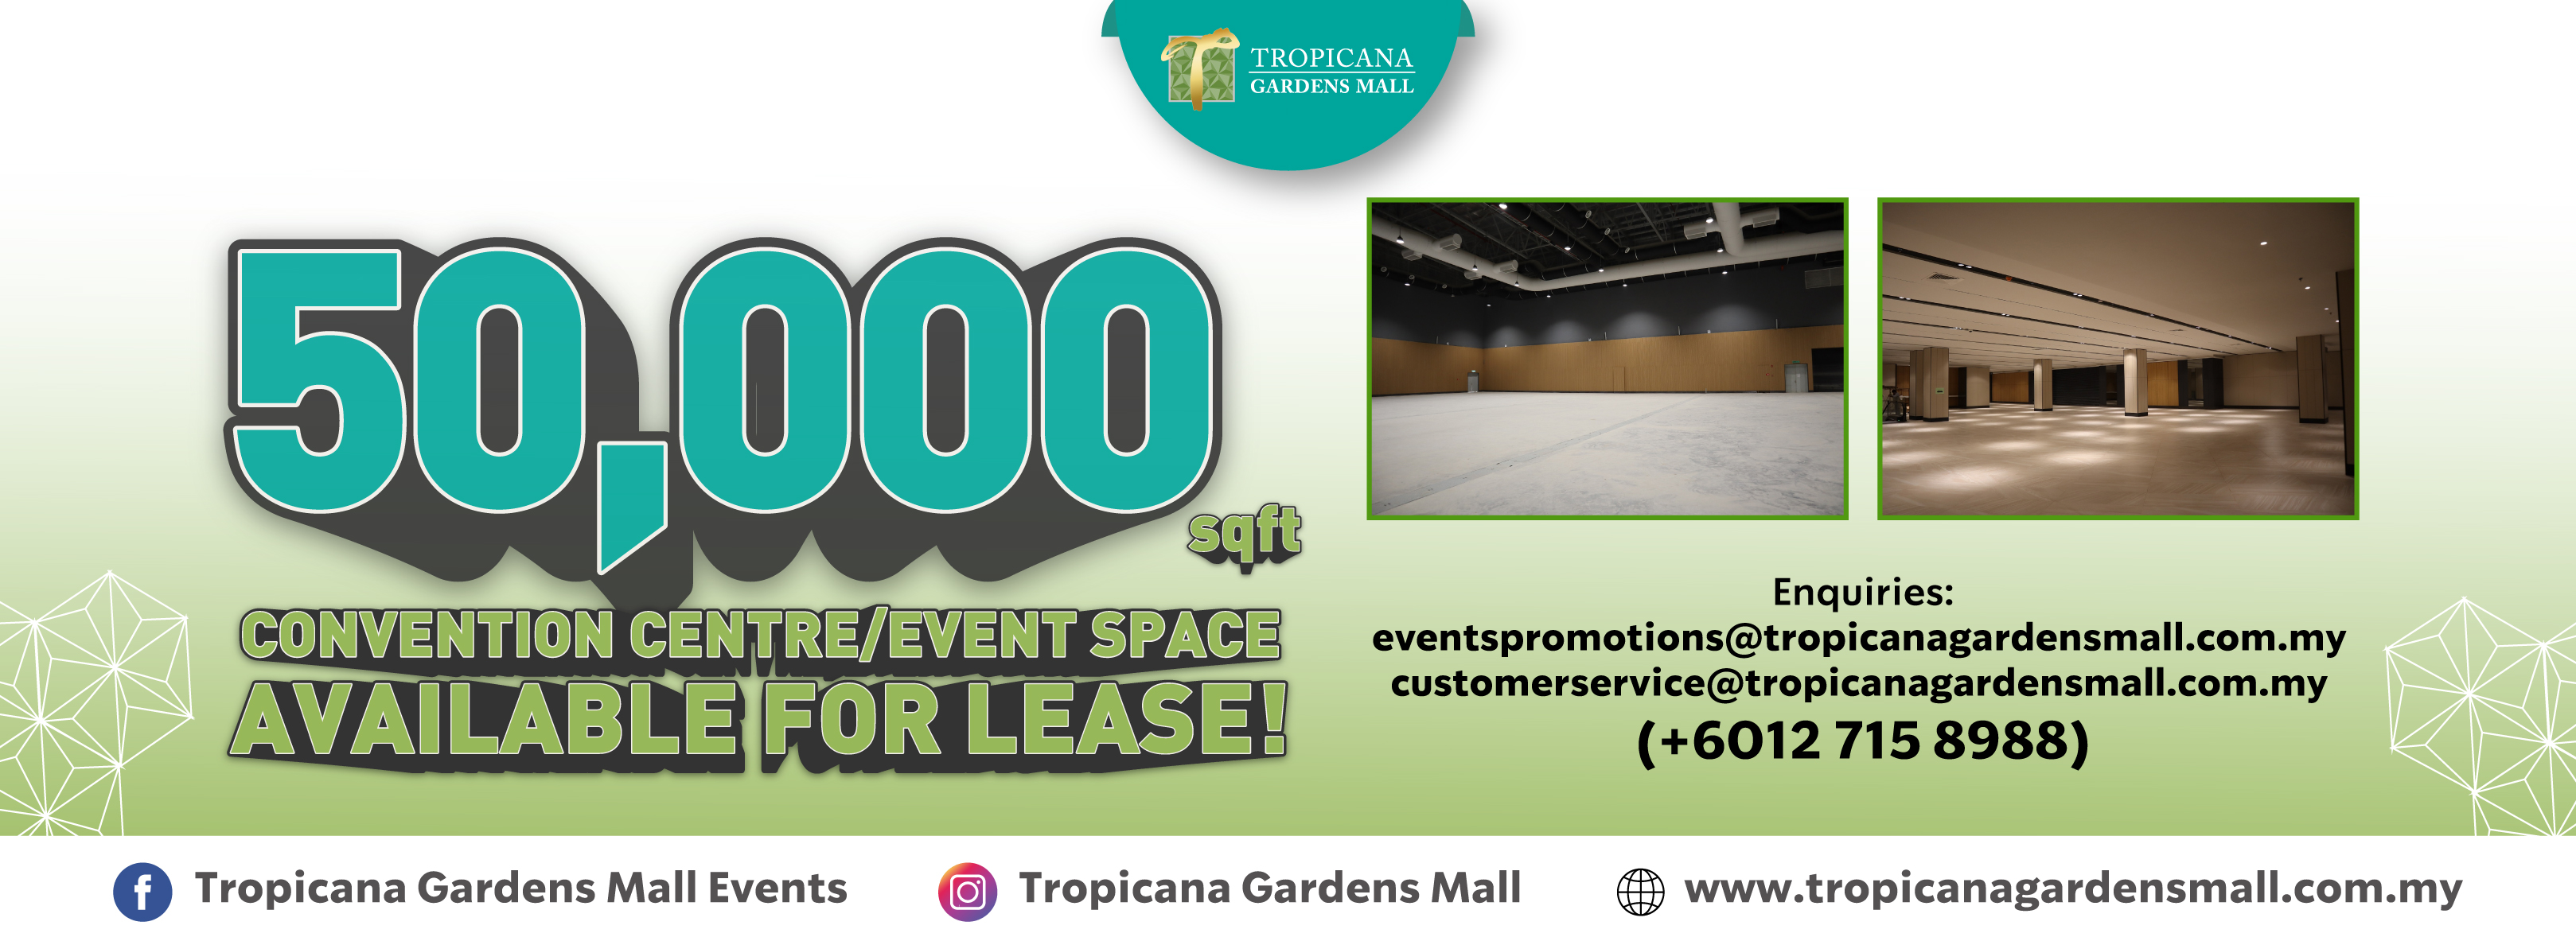 Tropicana Gardens Mall Convention Centre For Lease